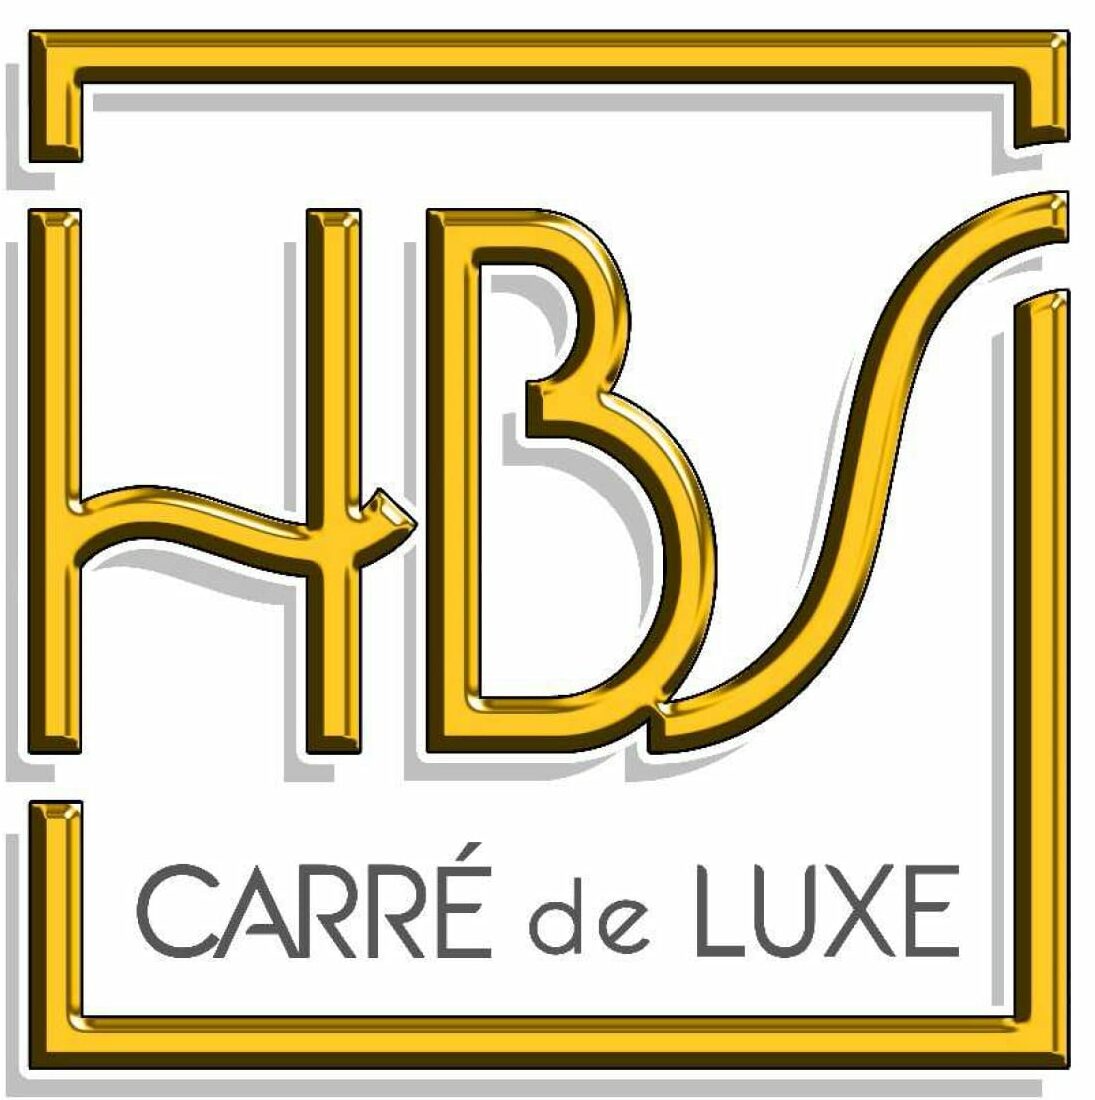 HBS – Carré de Luxe